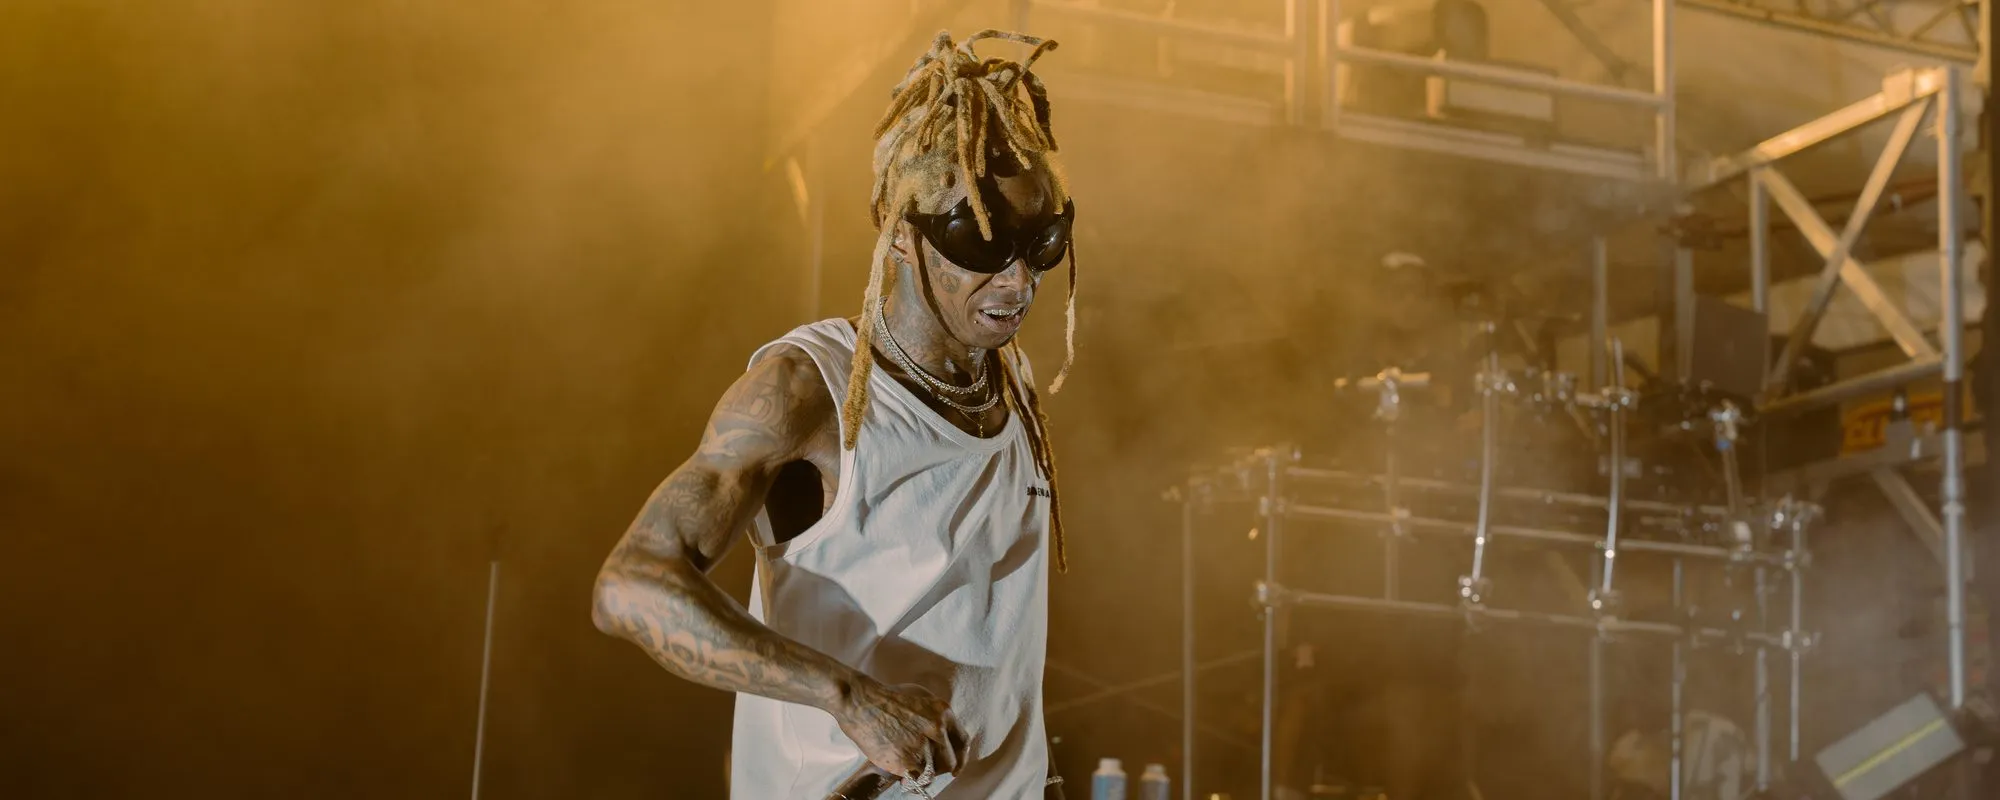 Lil Wayne Announces New Mixtape Ahead of ‘Tha Carter VI’